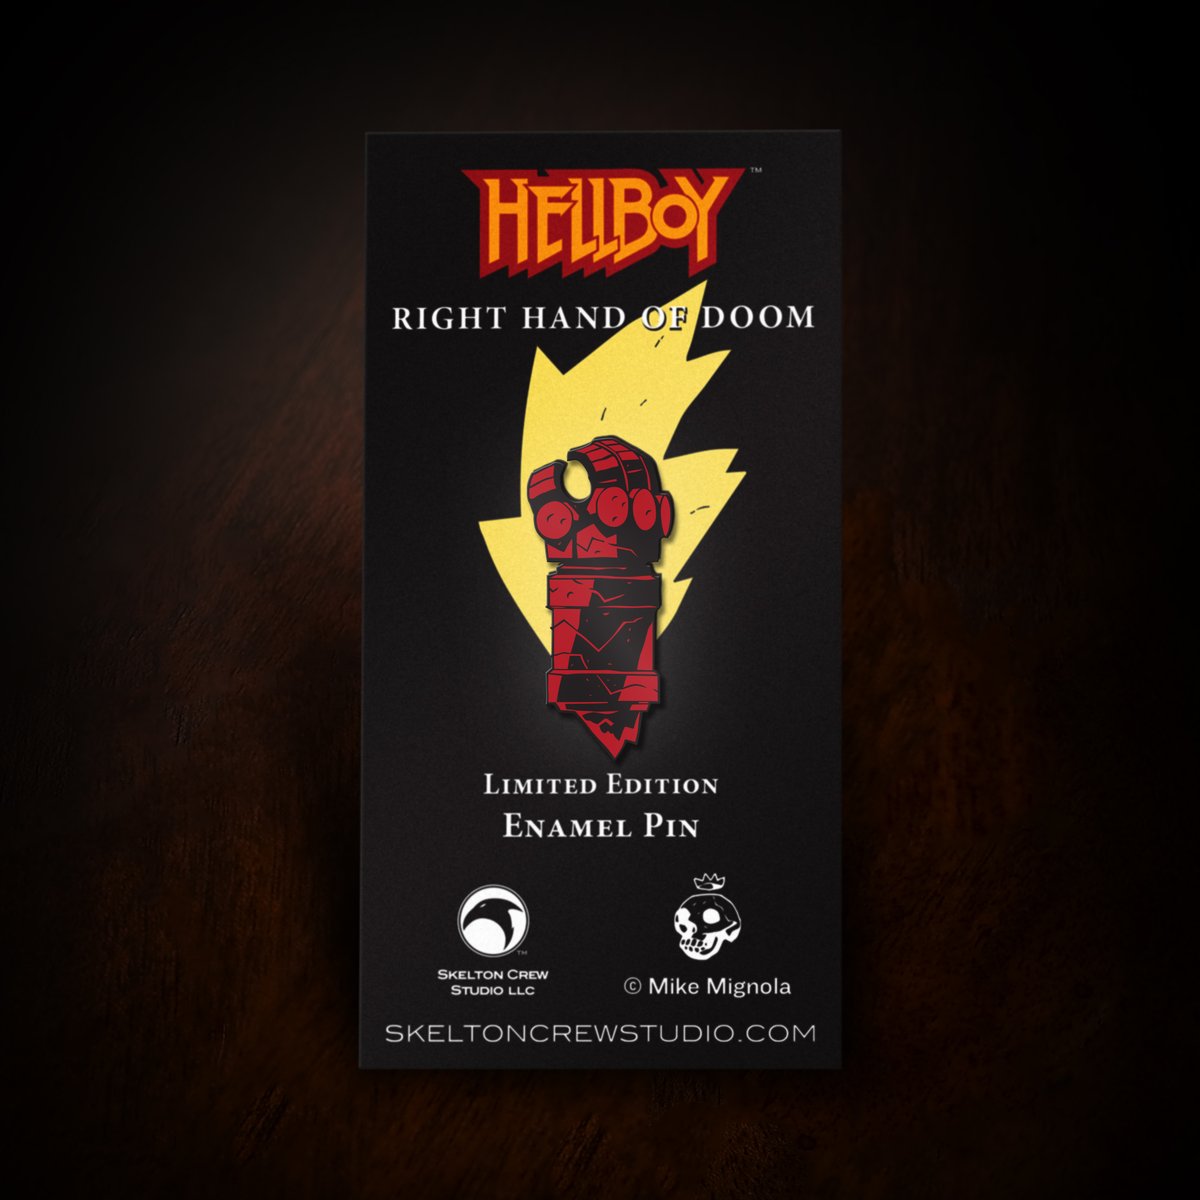 Hellboy: Limited Edition itty bitty Hellboy statue! Less than 10